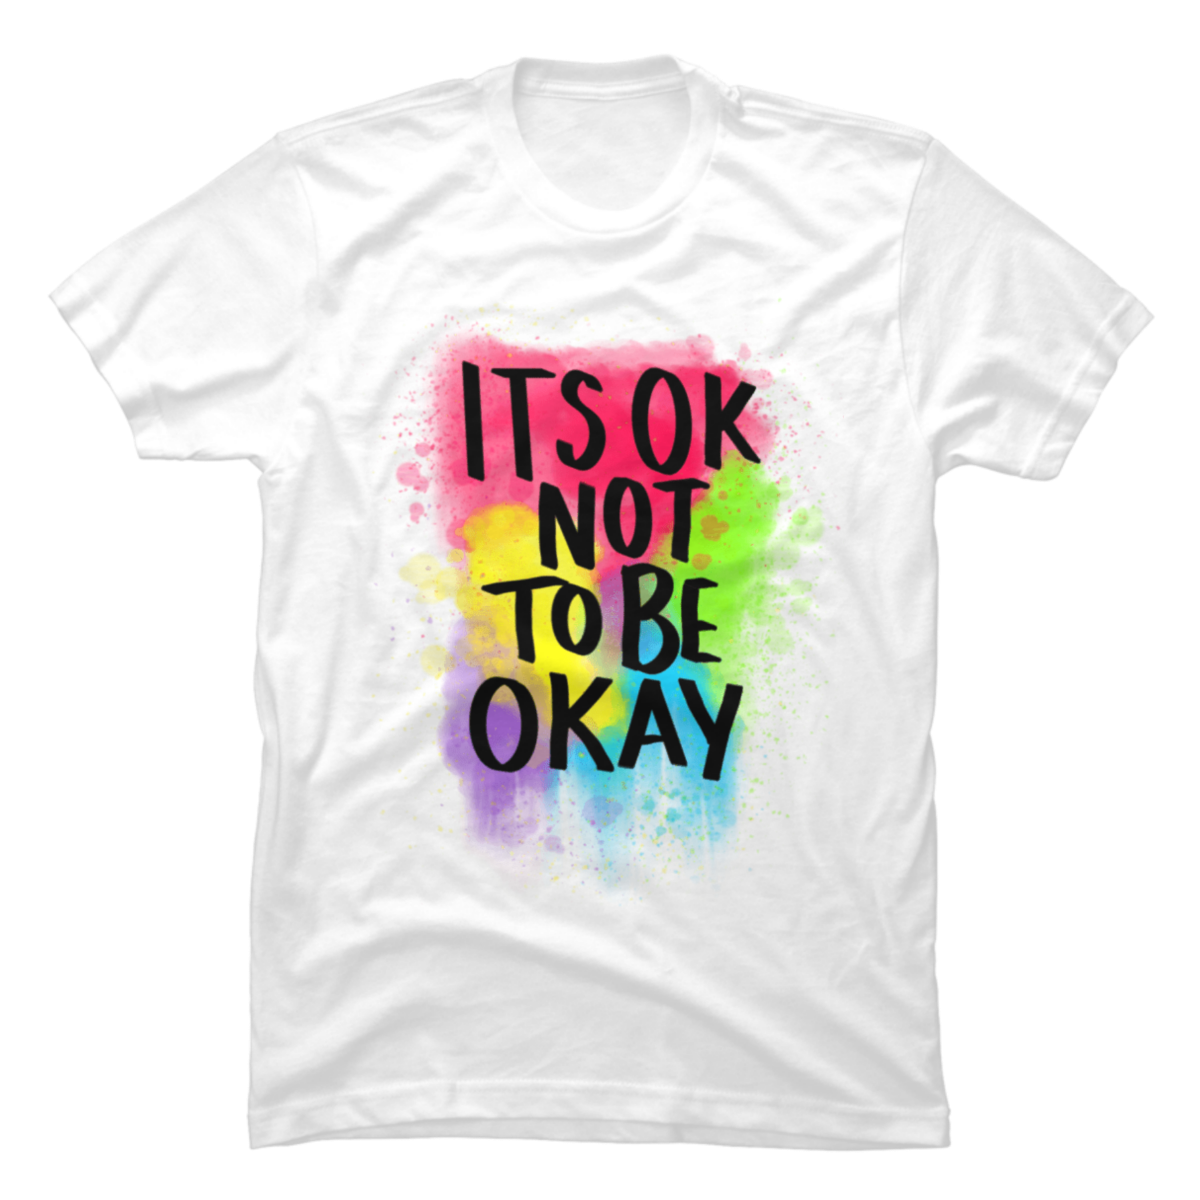 it's okay to not be okay shirt